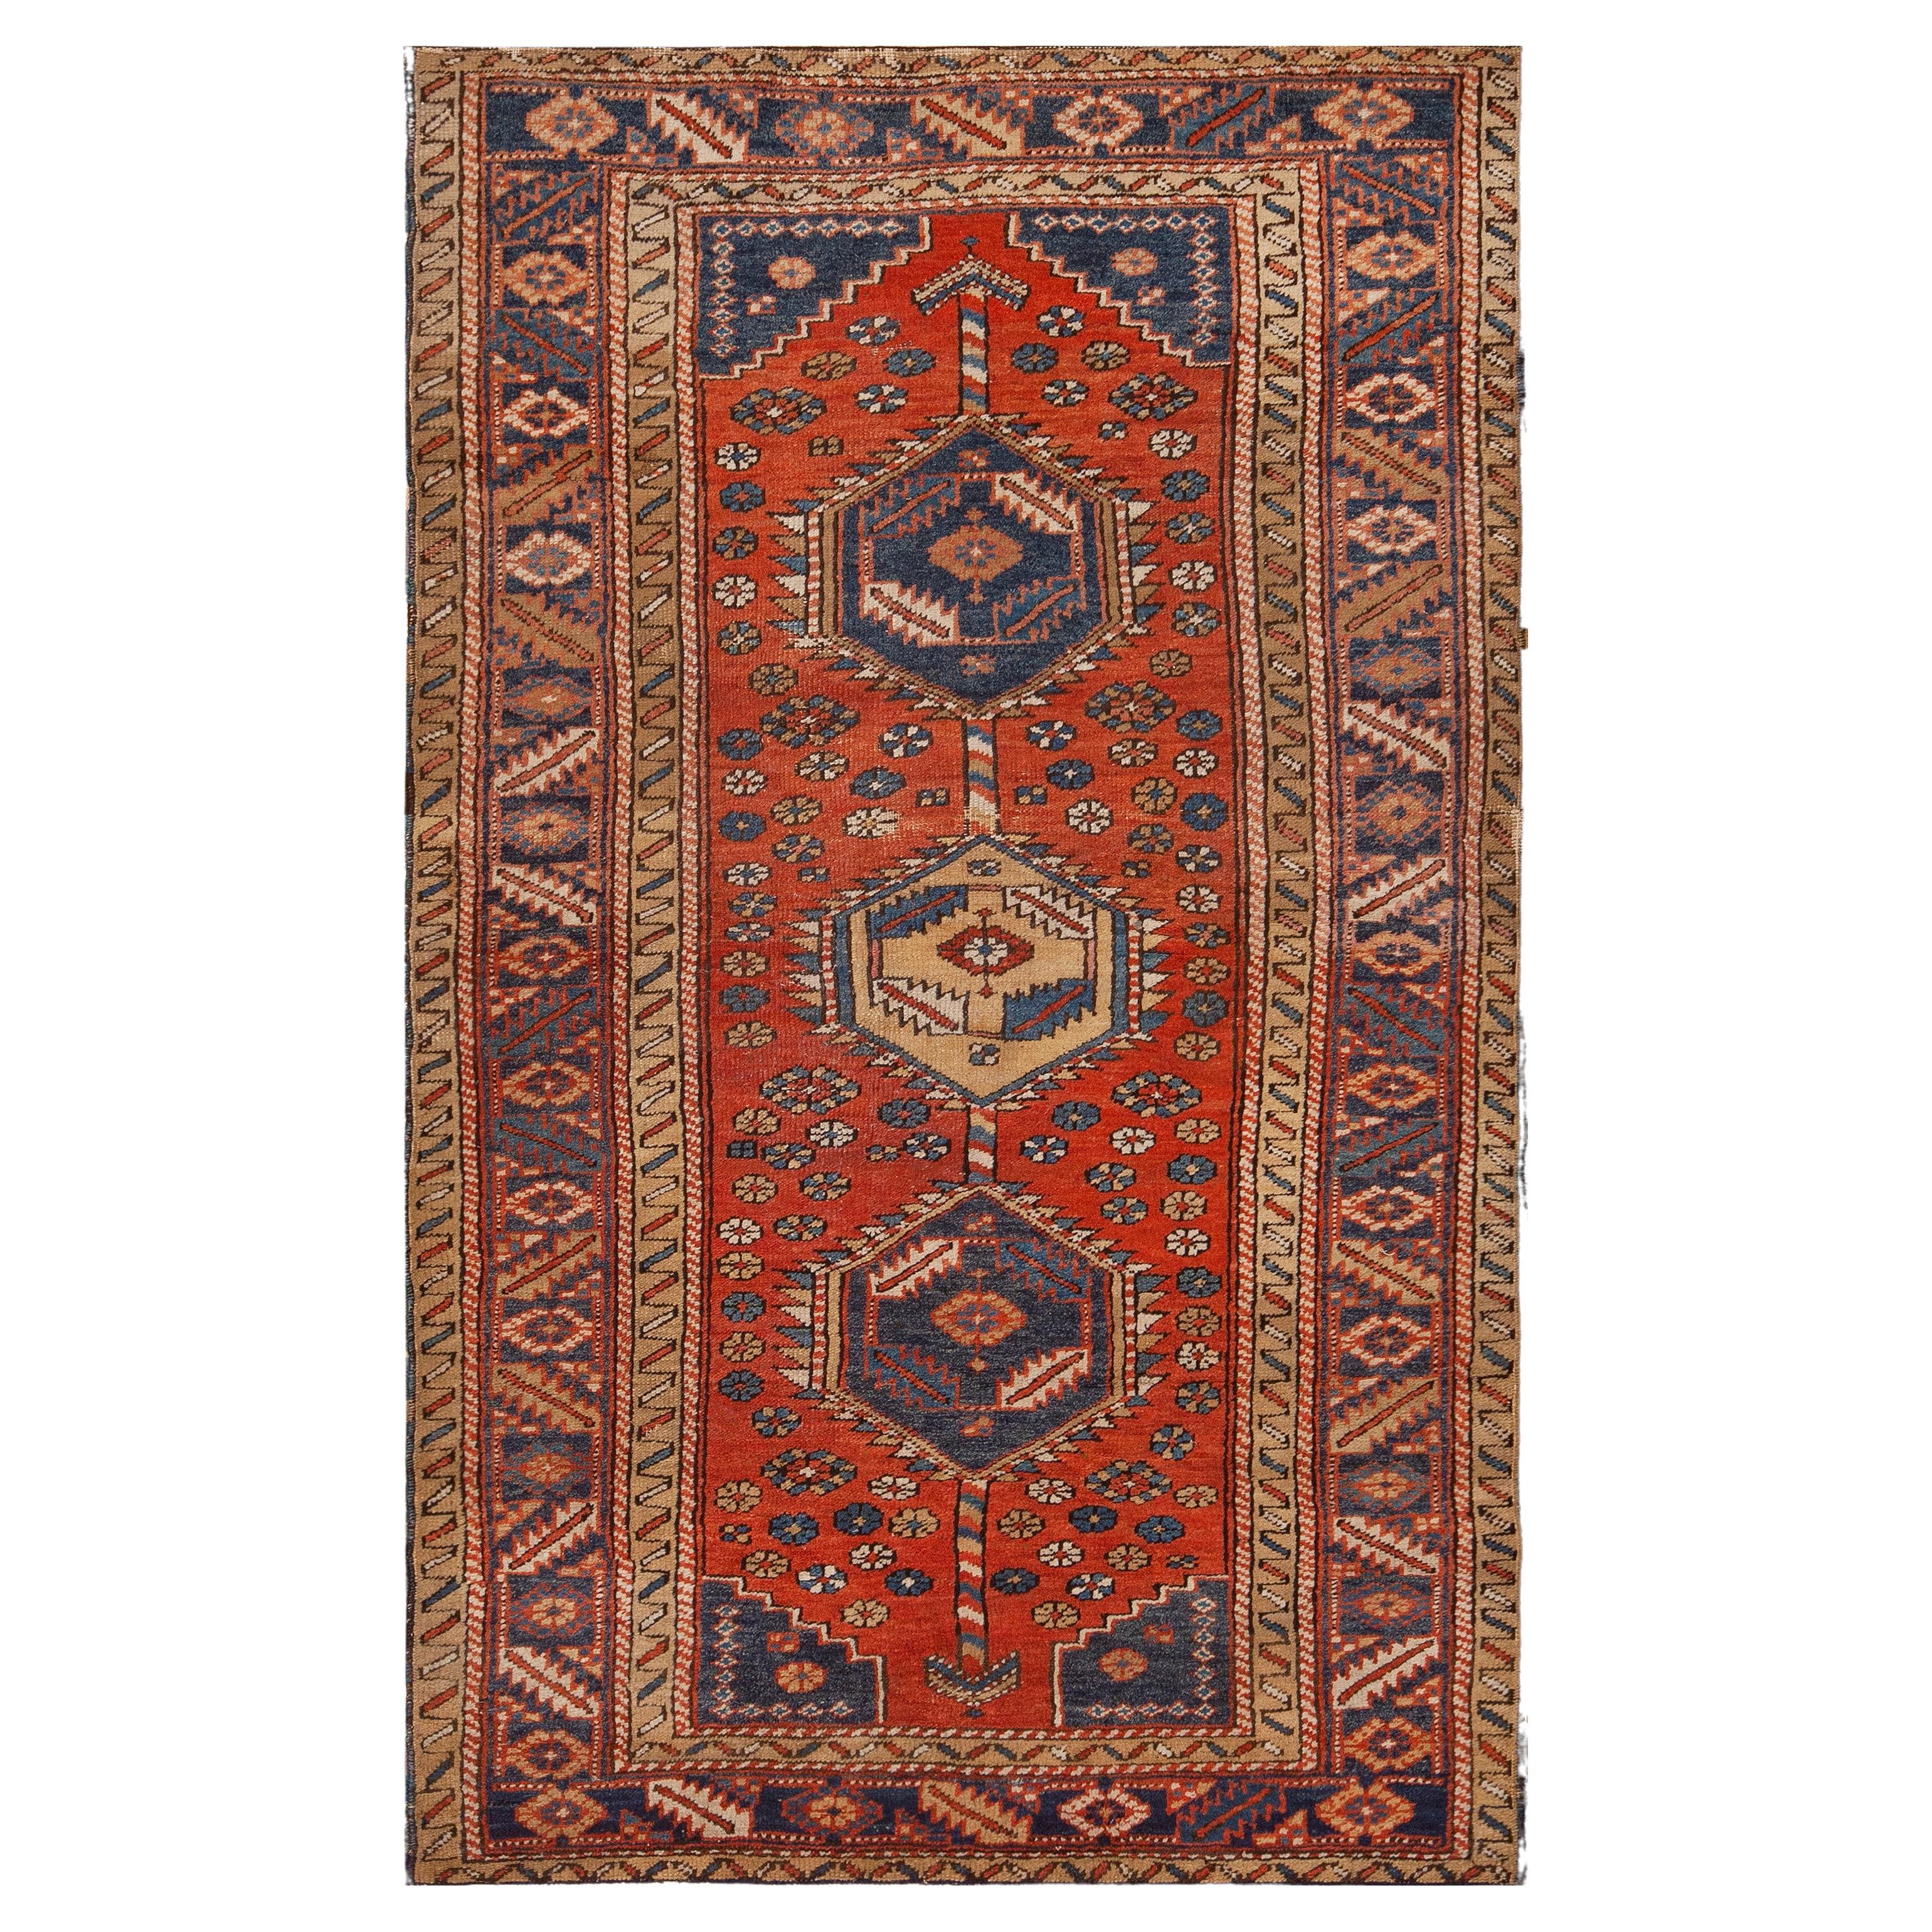 Beautiful Small Rustic Geometric Tribal Antique Persian Heriz Rug 3'10" x 6'5"